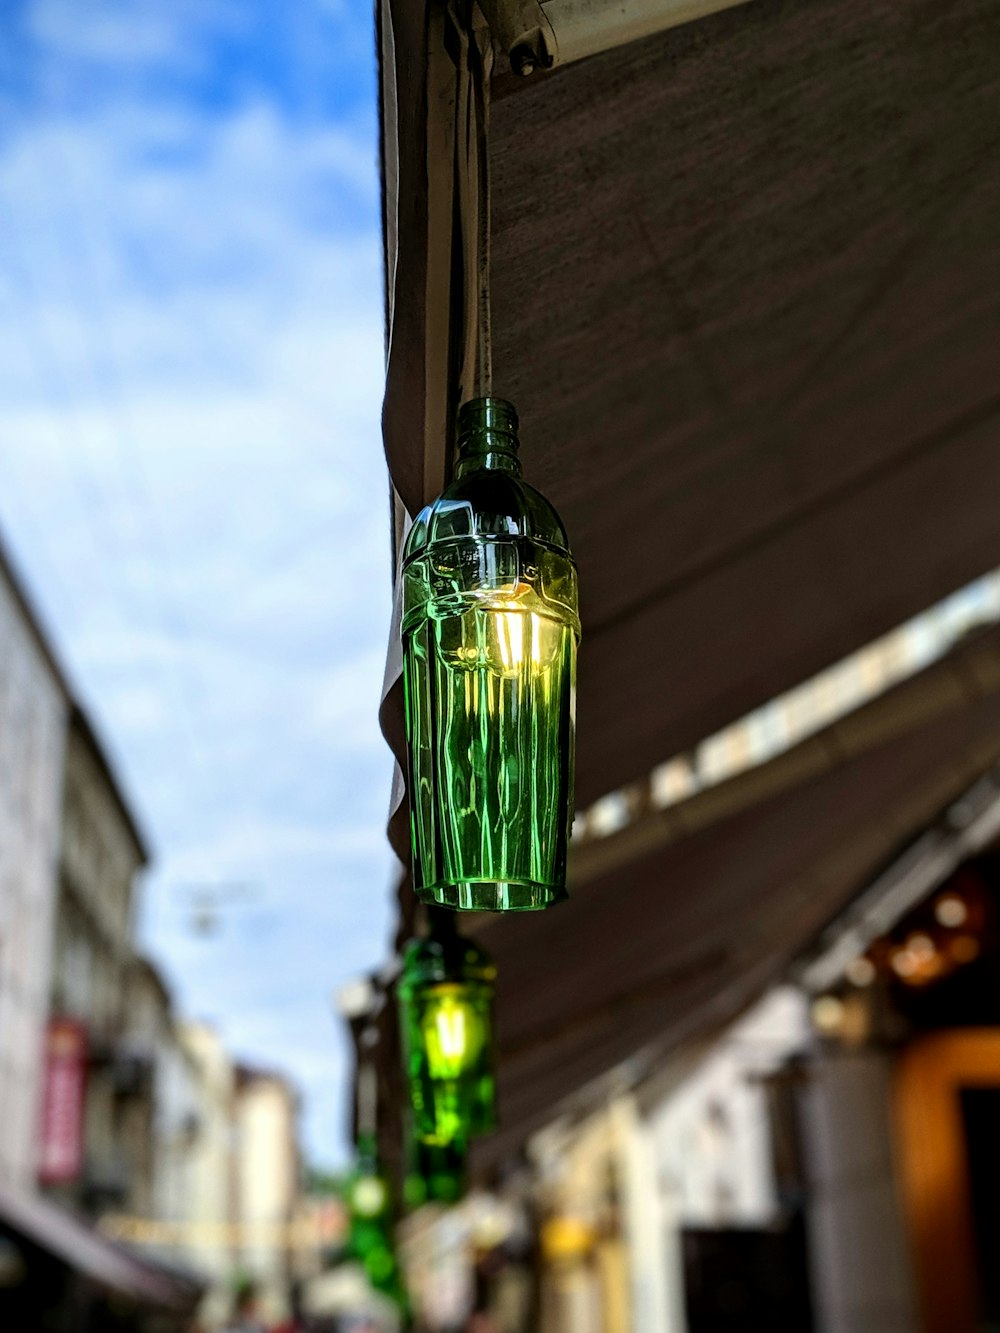 green pendant lamp